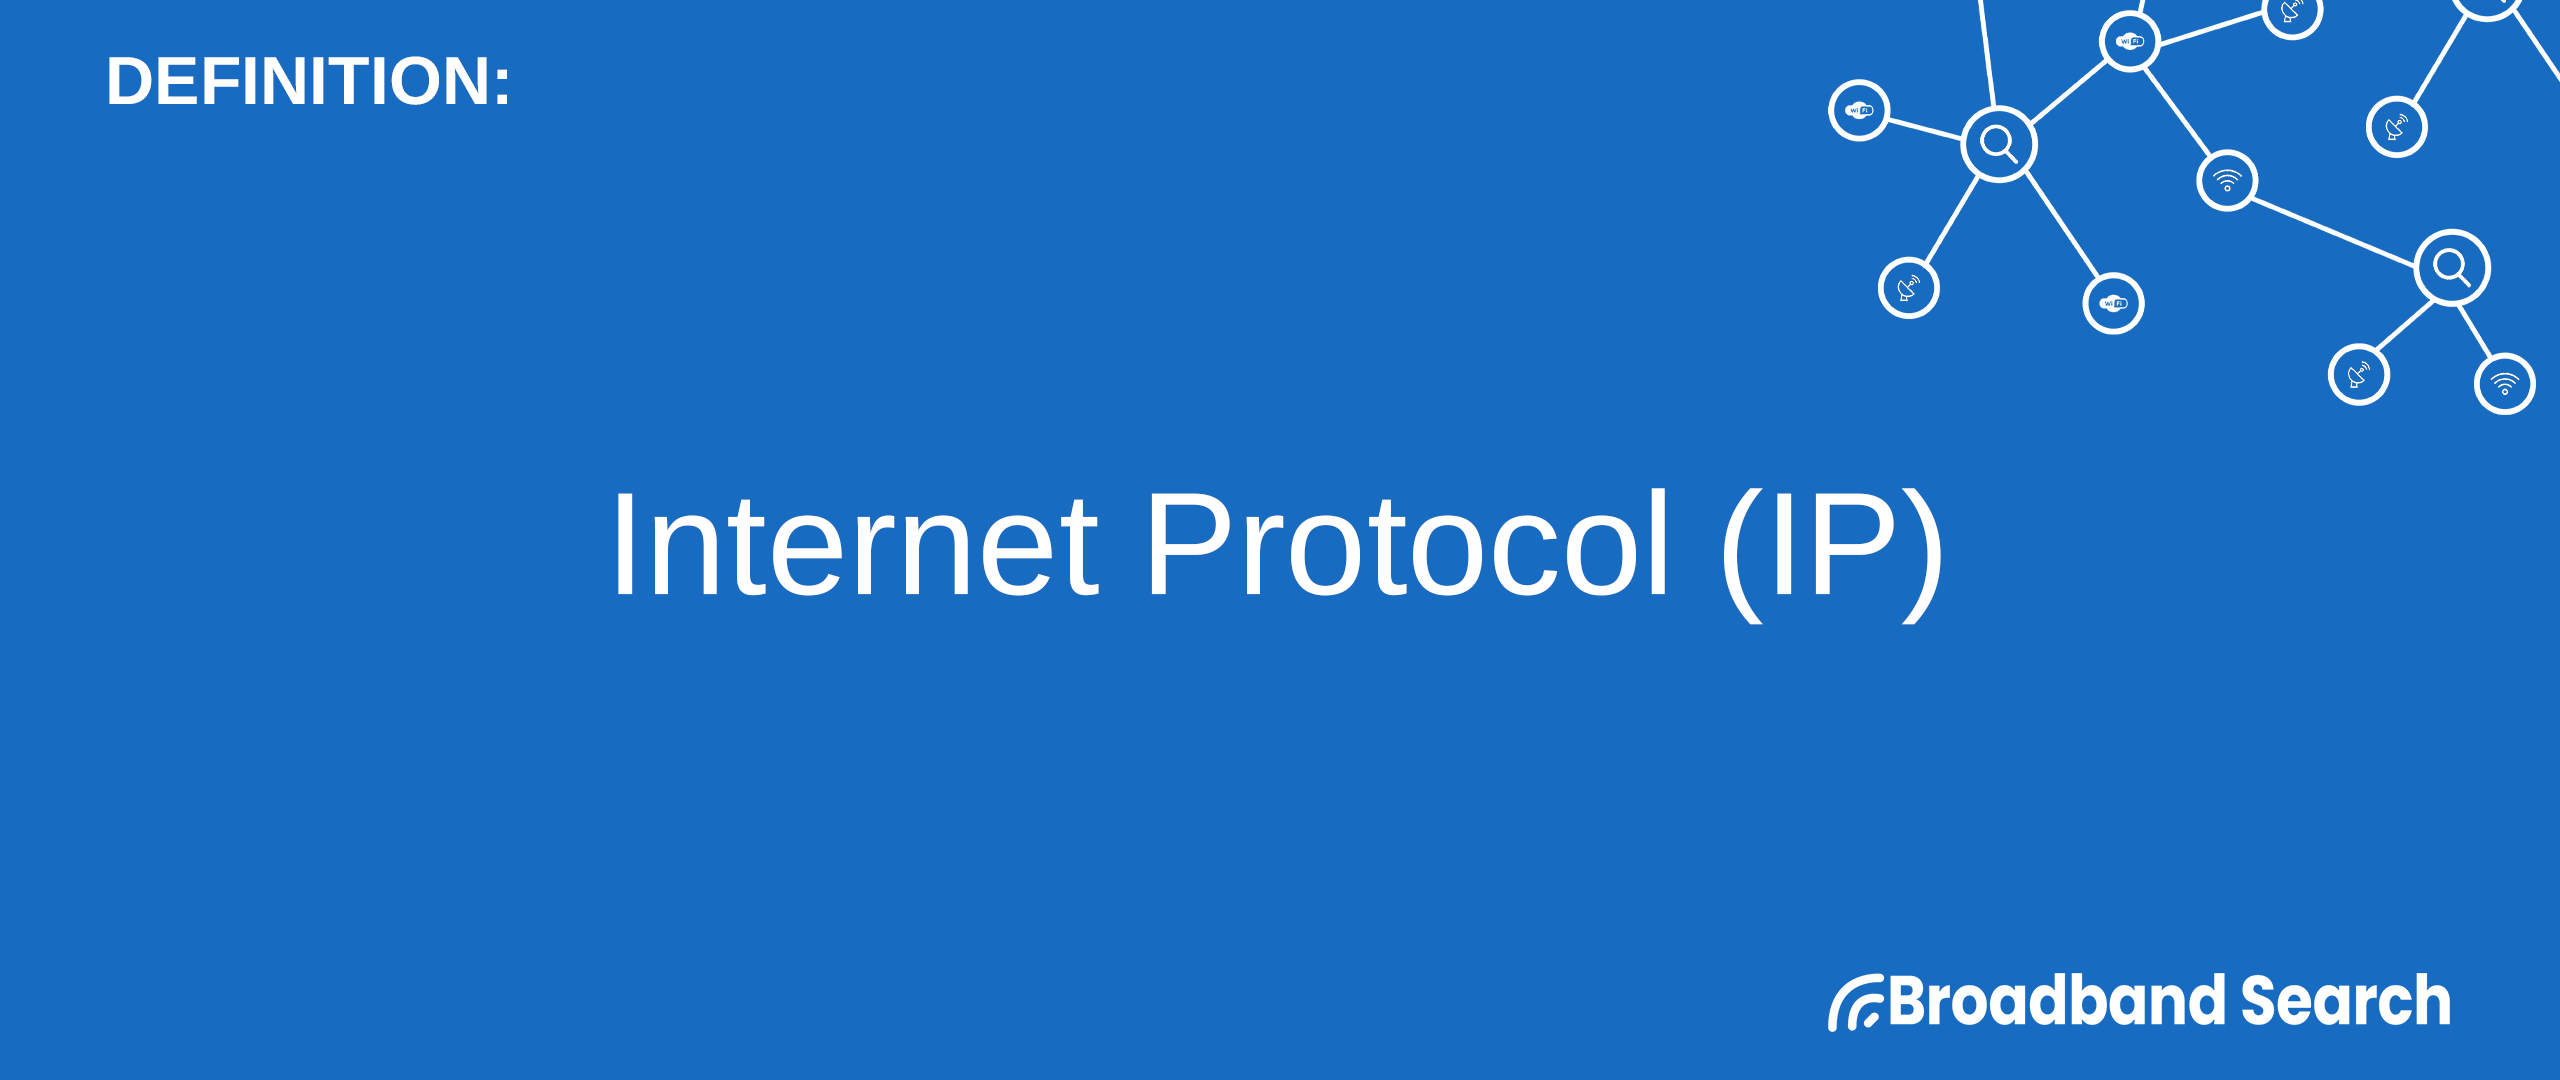 internet protocol definition